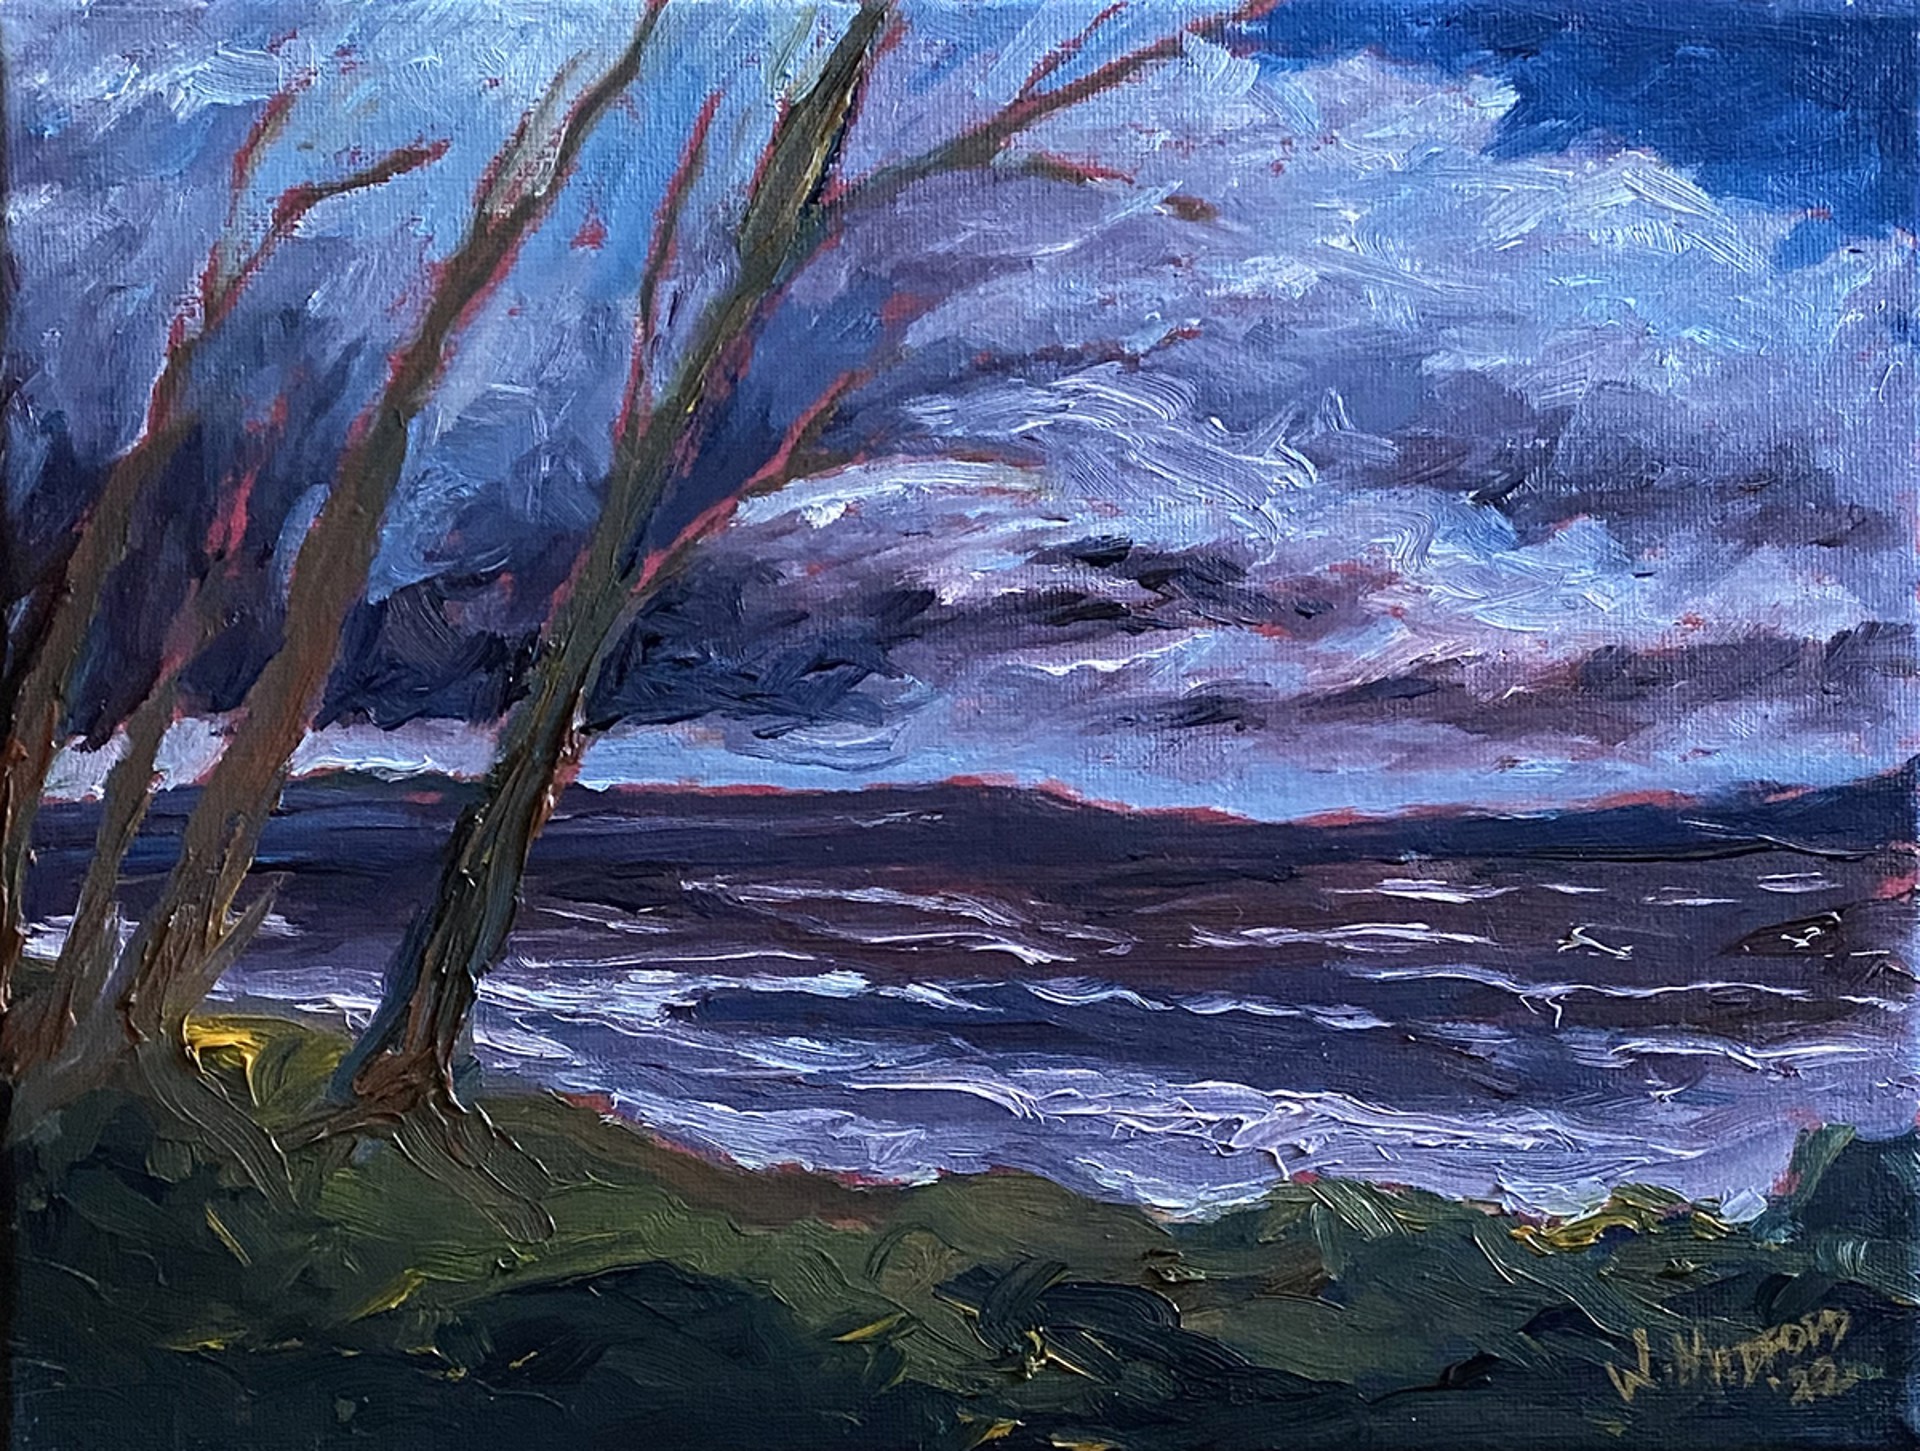 Storm Over Cameron by Wayne Medford